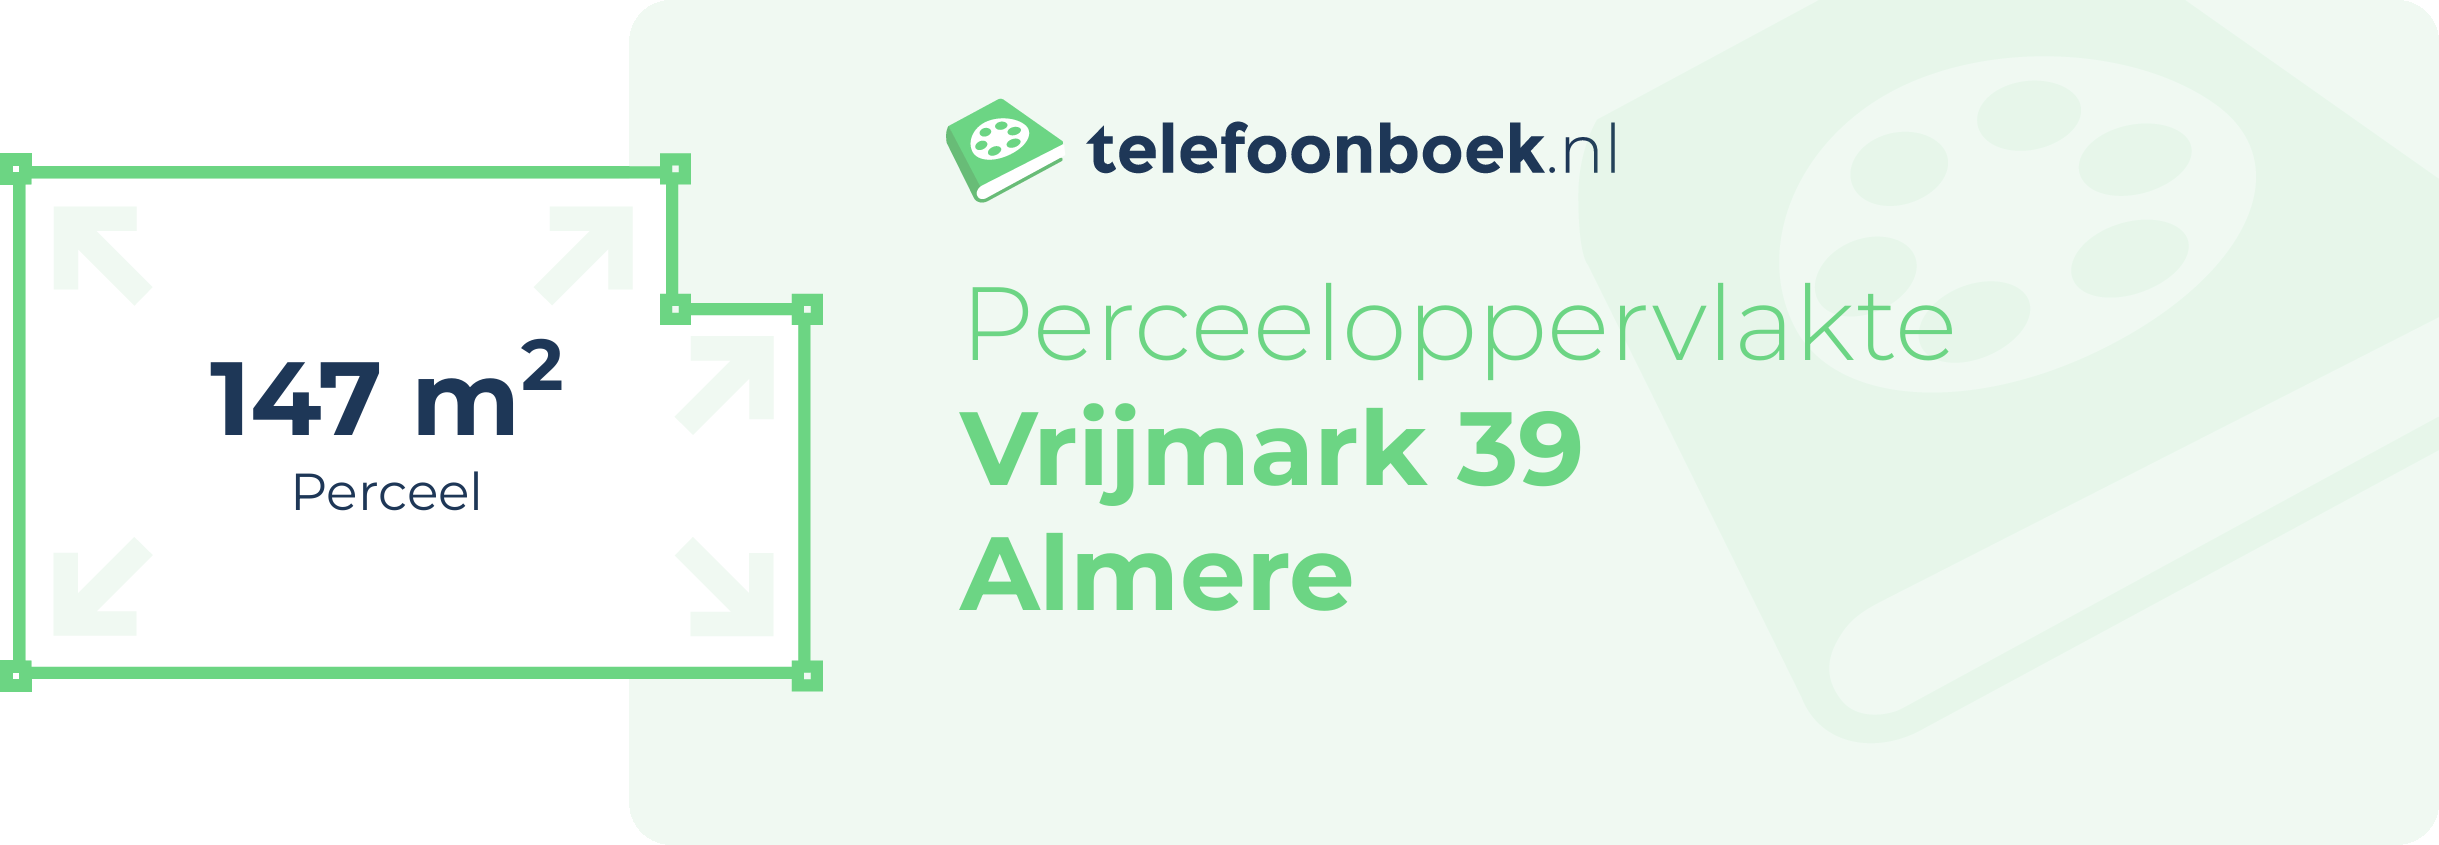 Perceeloppervlakte Vrijmark 39 Almere